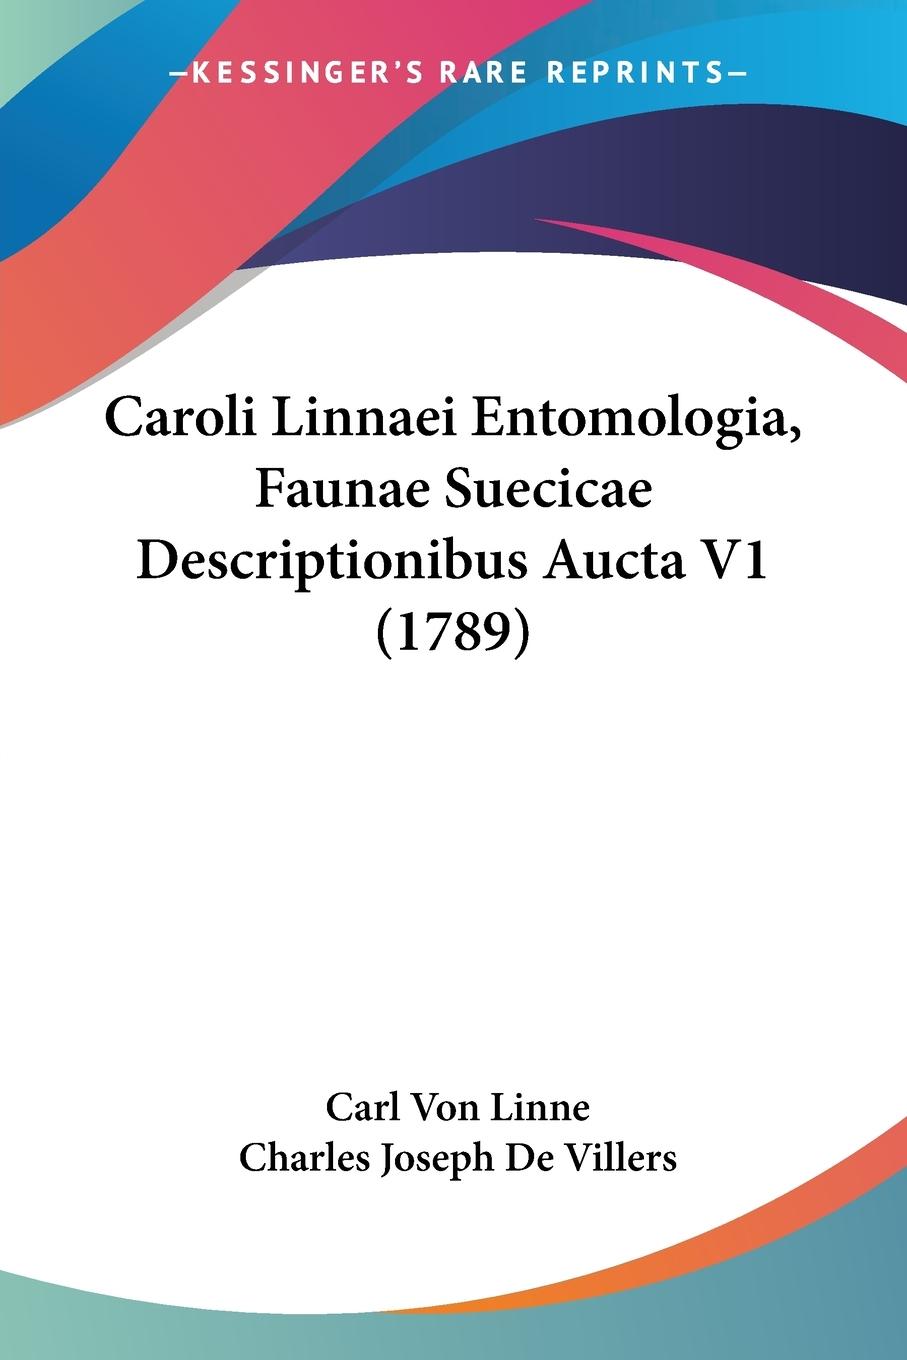 Caroli Linnaei Entomologia, Faunae Suecicae Descriptionibus Aucta V1 (1789) - Linne, Carl Von